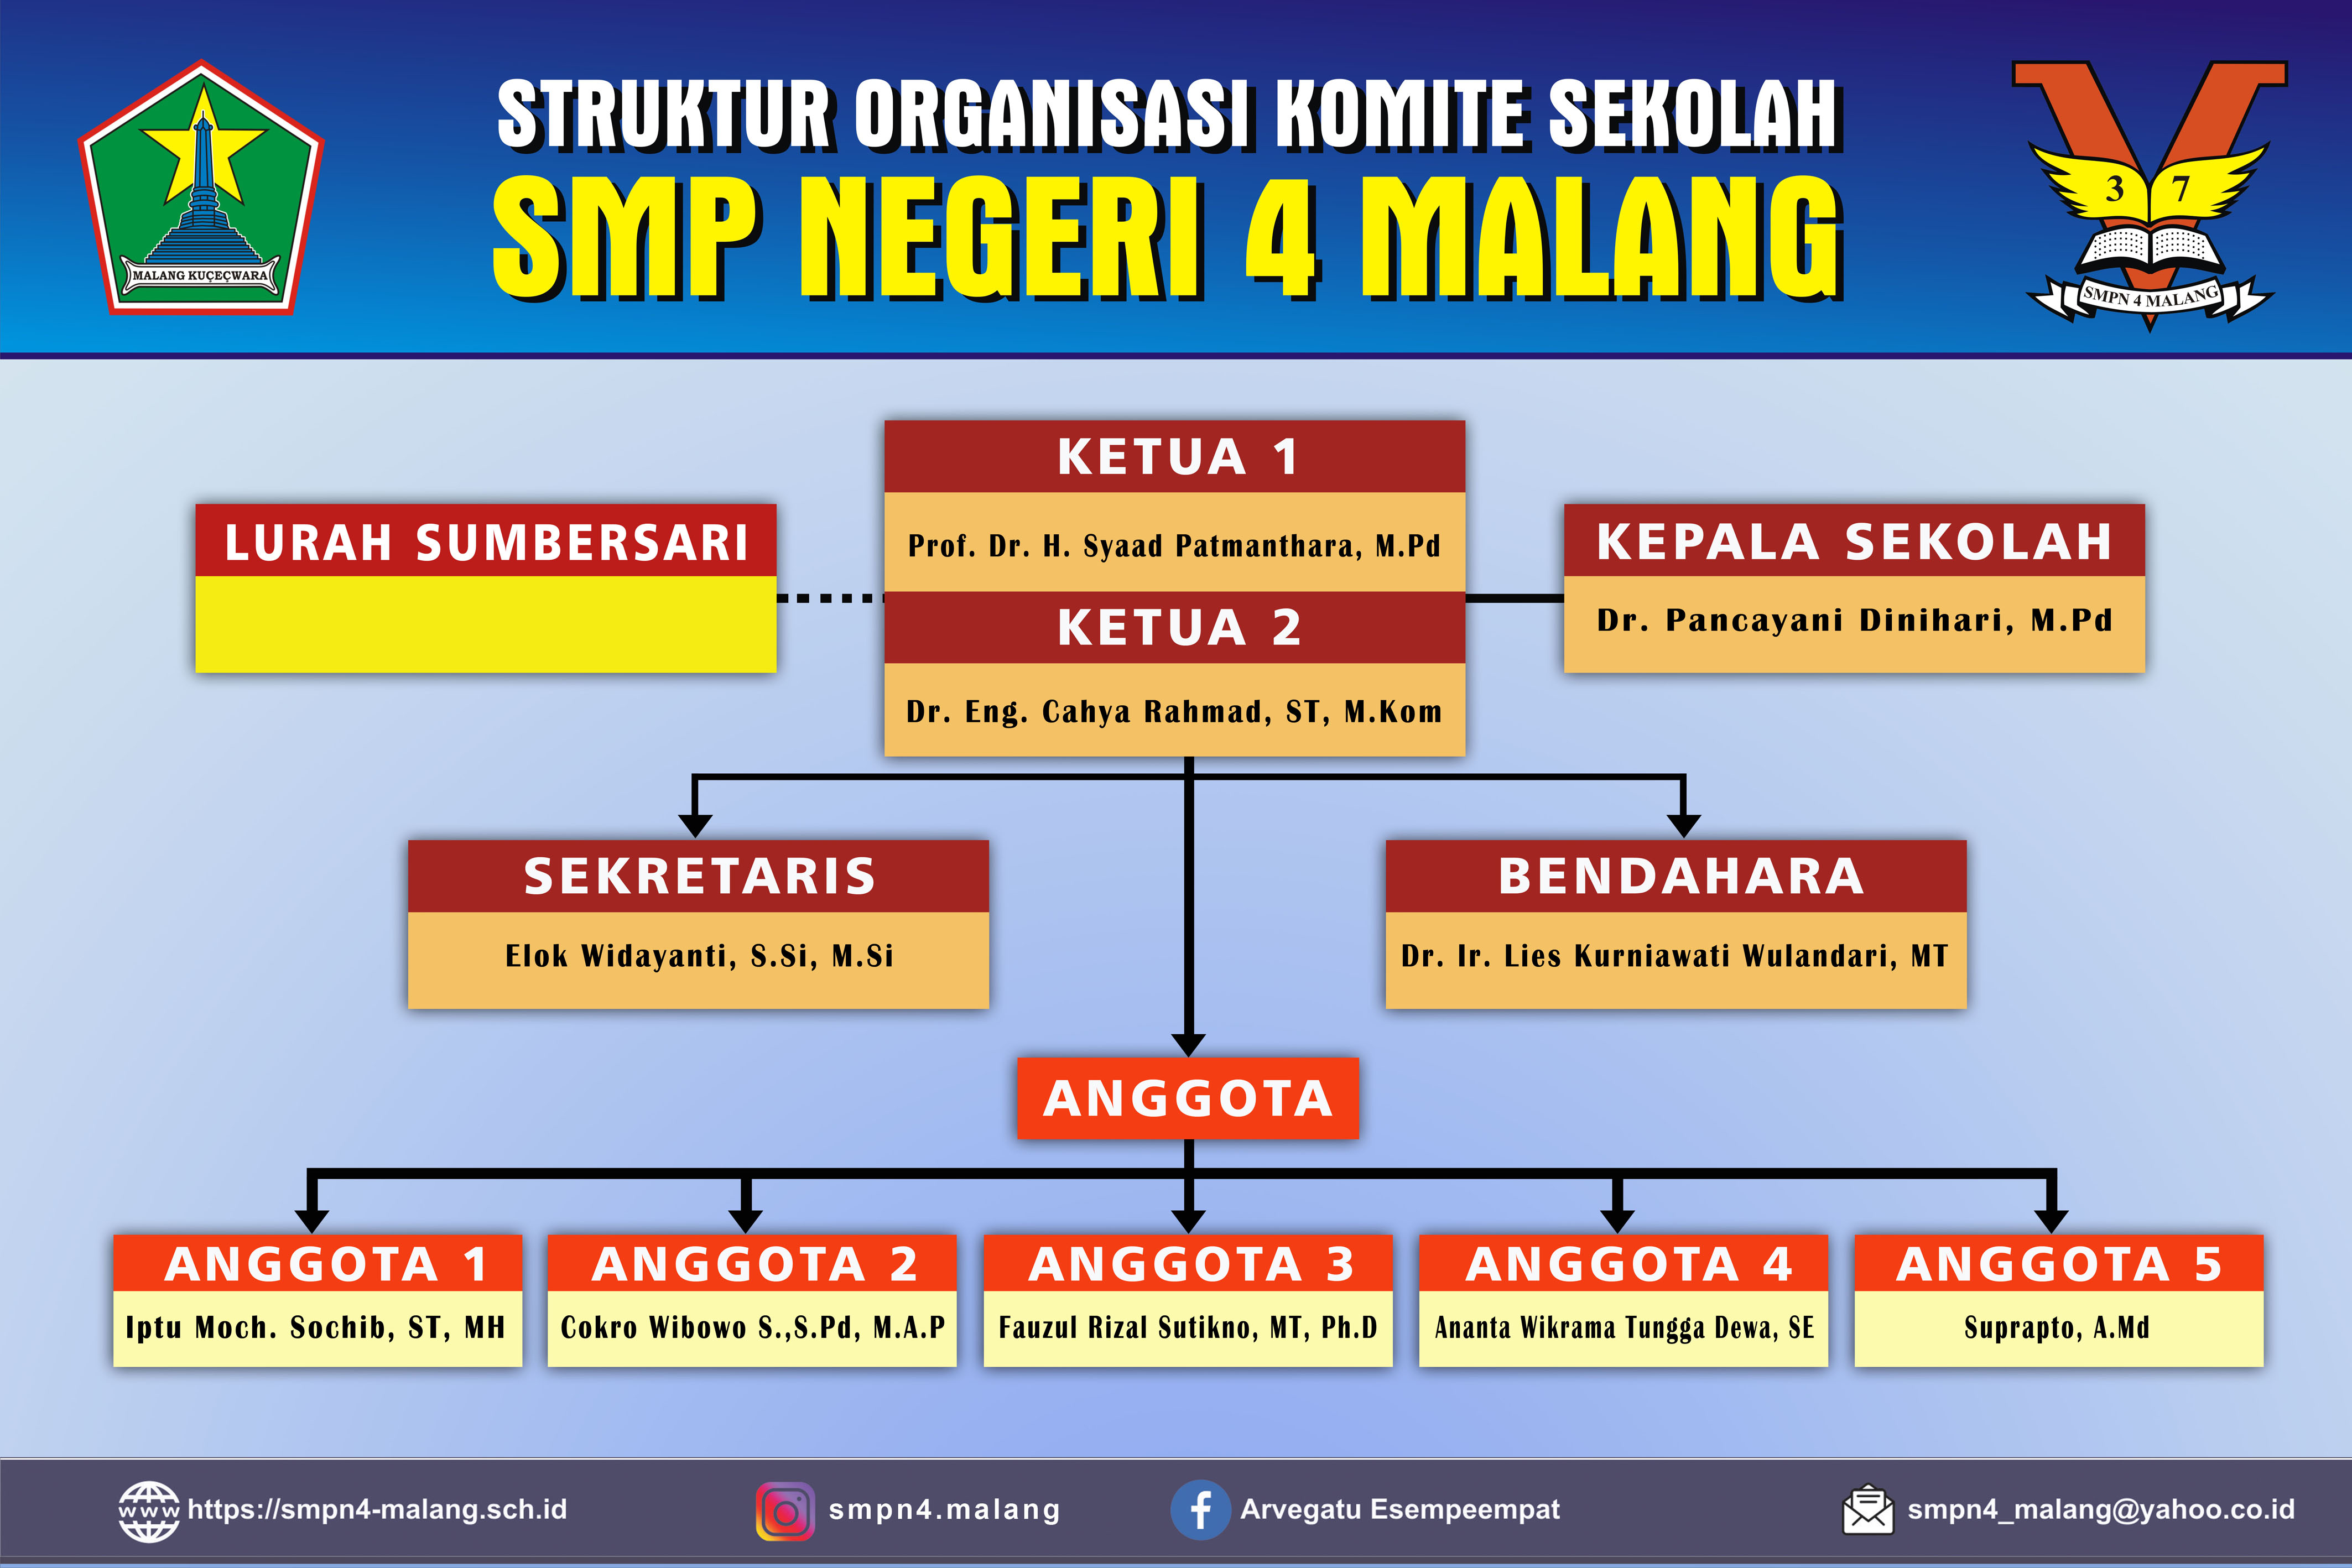 Komite Sekolah SMP Negeri 4 Malang